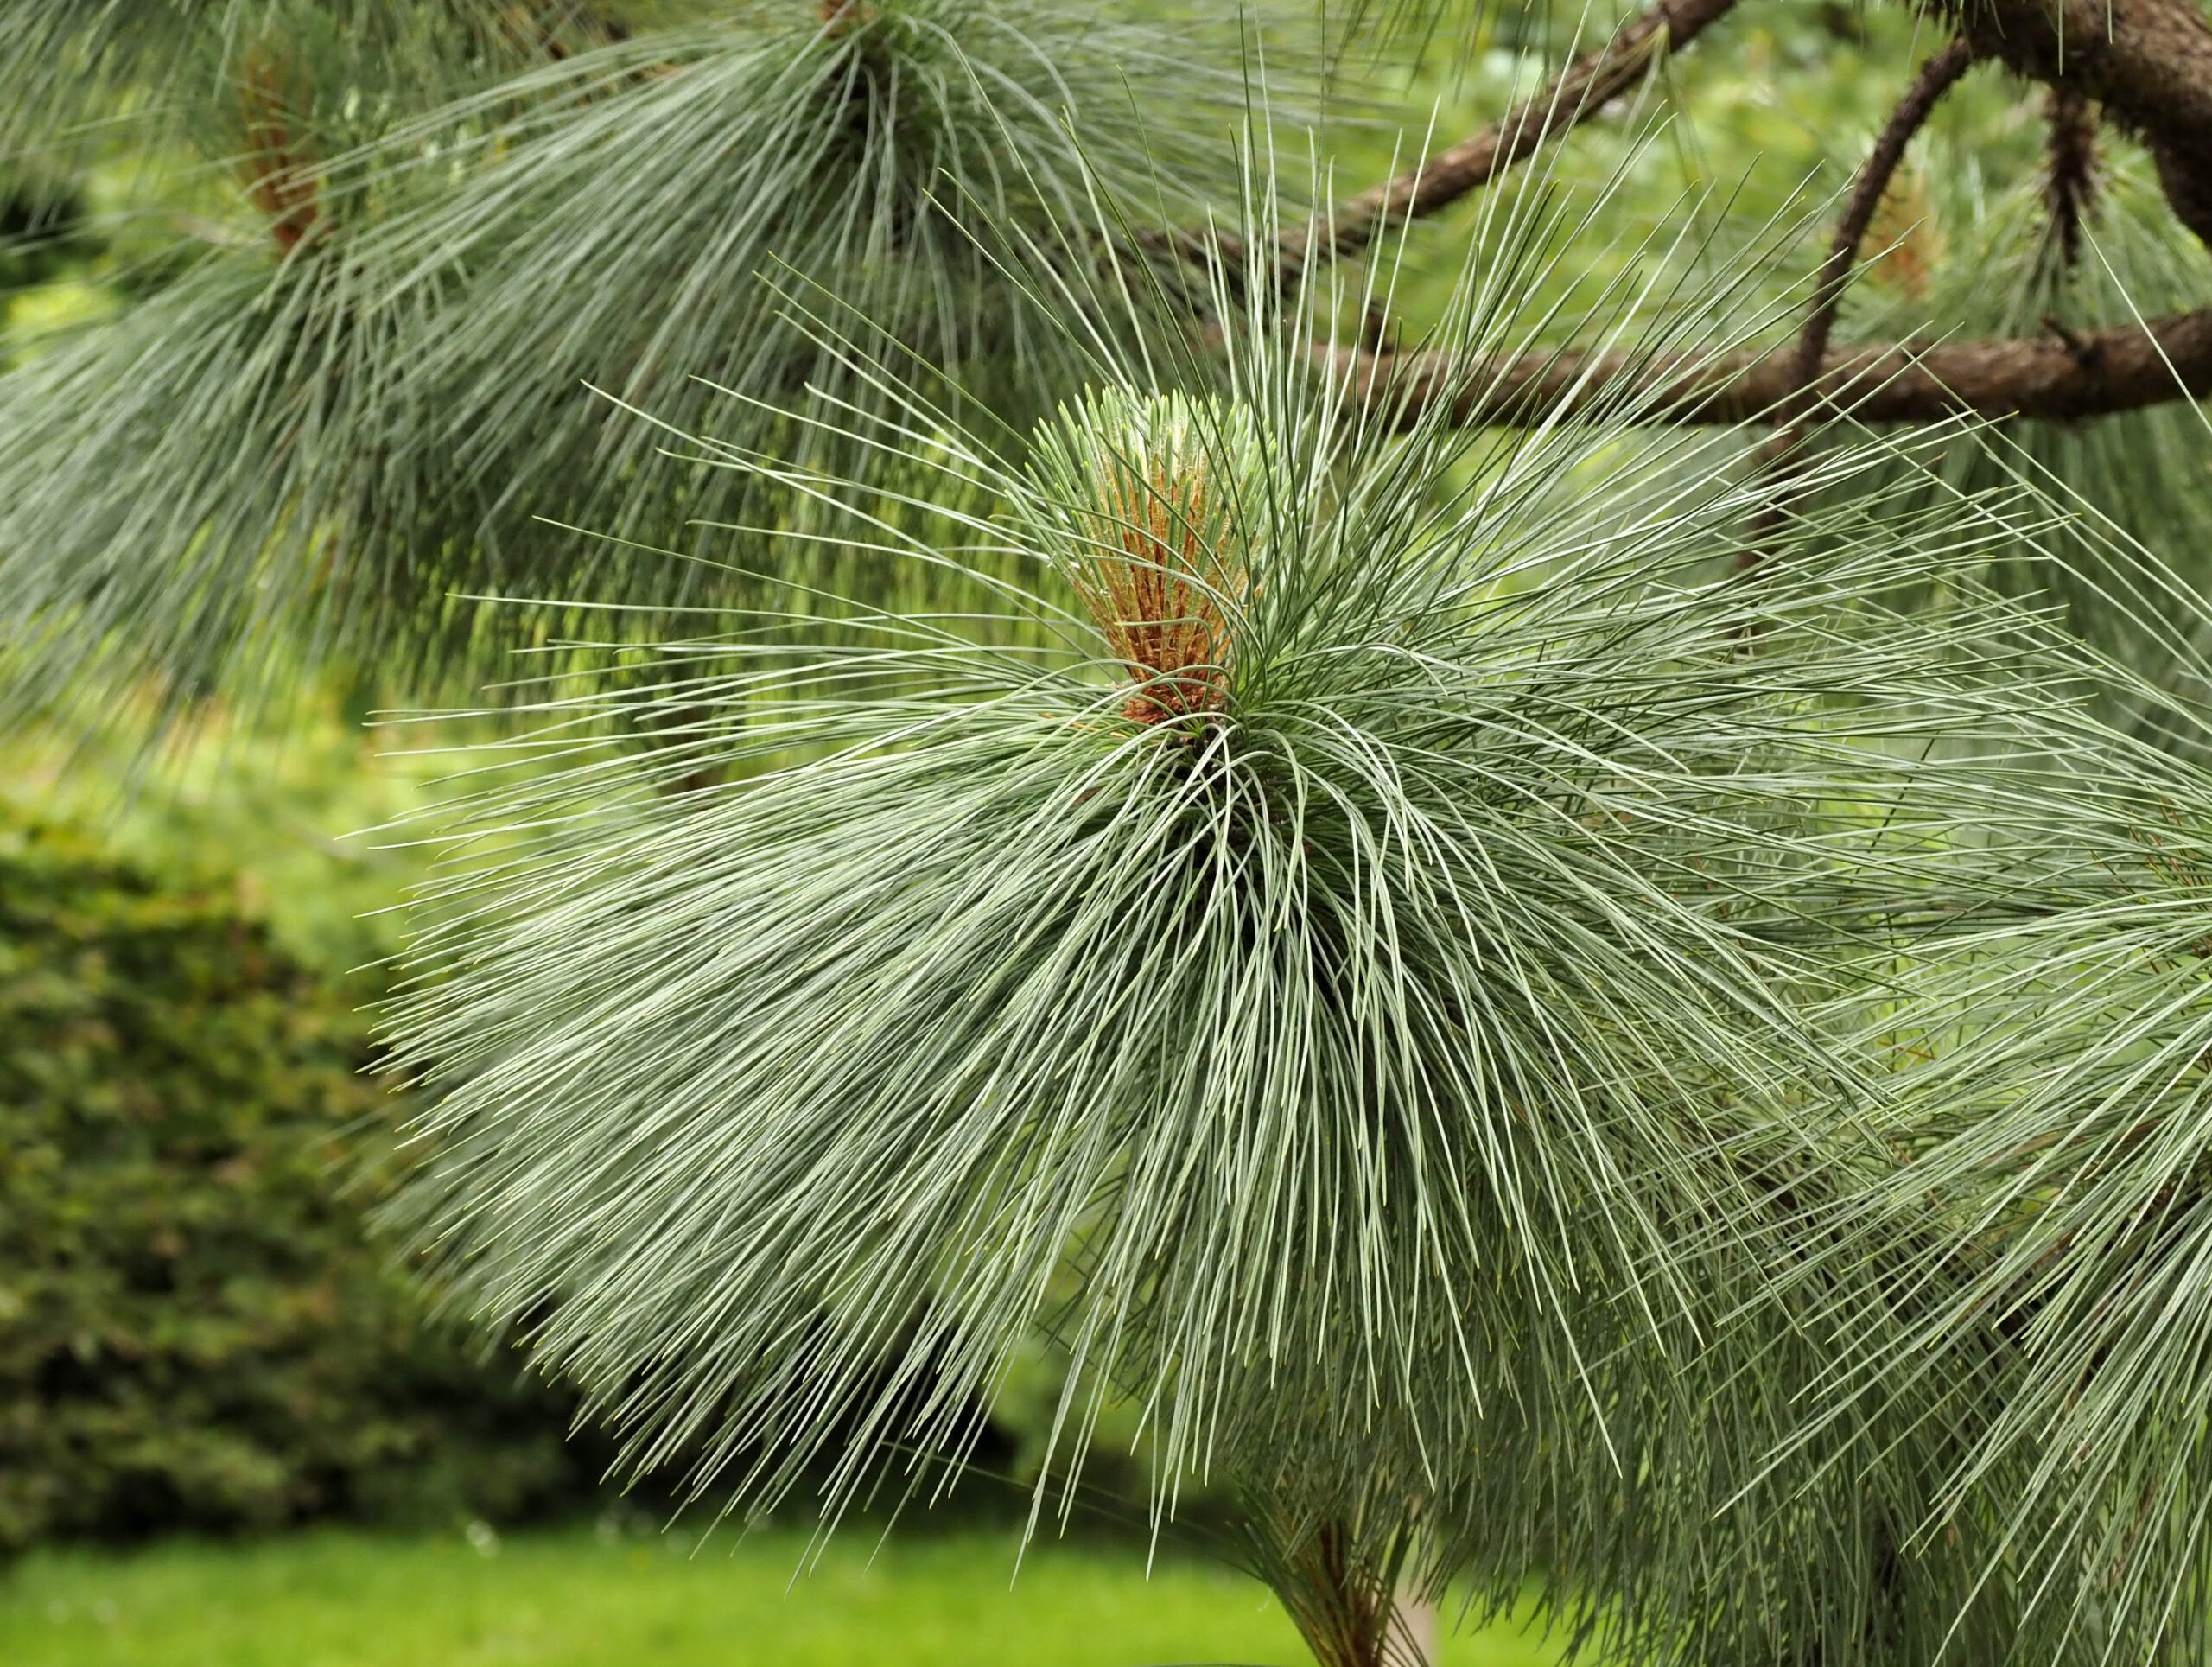 The long needles of Pinus montezuma ‘Sheffield Park’